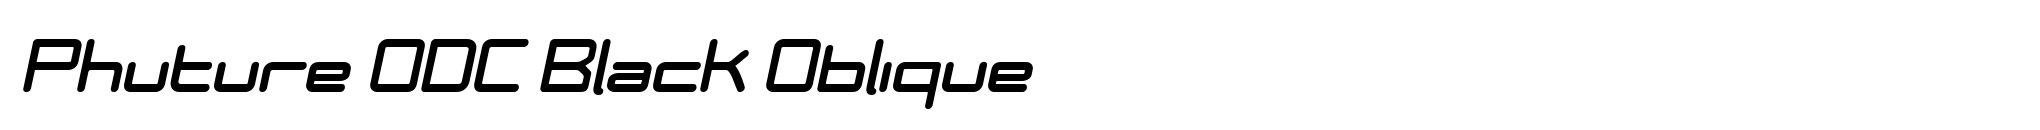 Phuture ODC Black Oblique image